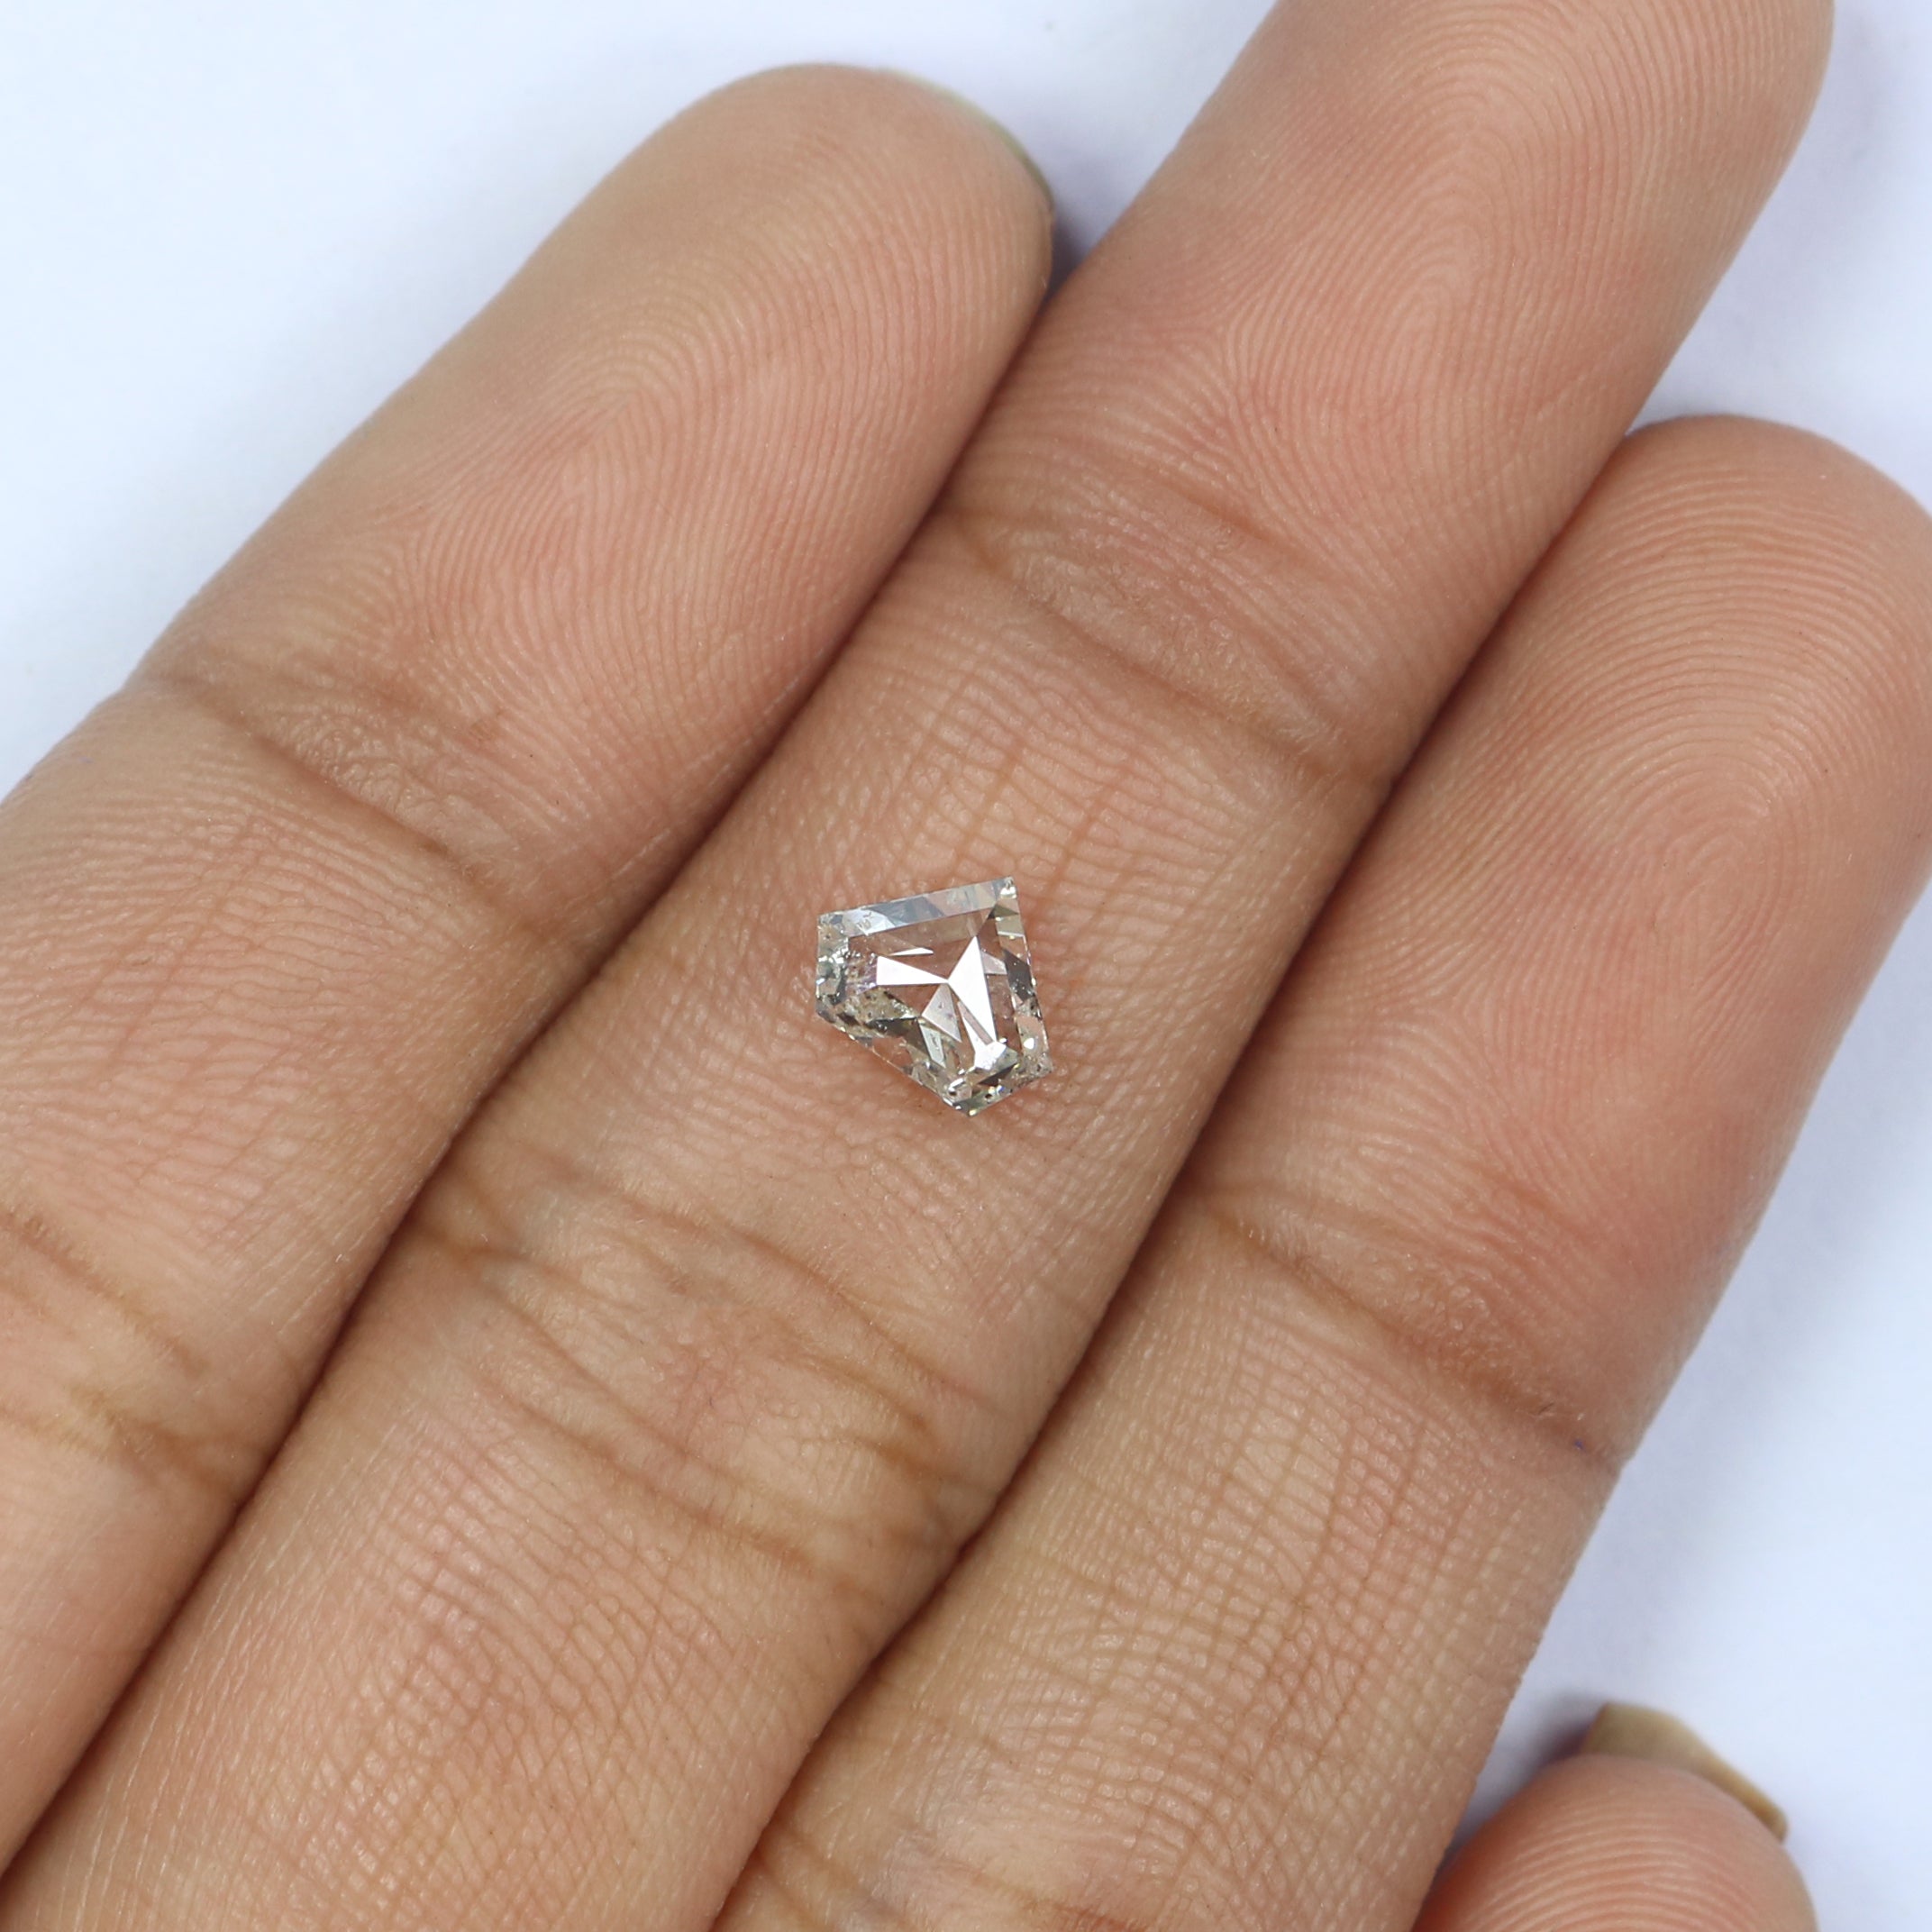 Natural Loose Shield Diamond White-G Color 0.67 CT 5.17 MM Shield Shape Rose Cut Diamond L2631